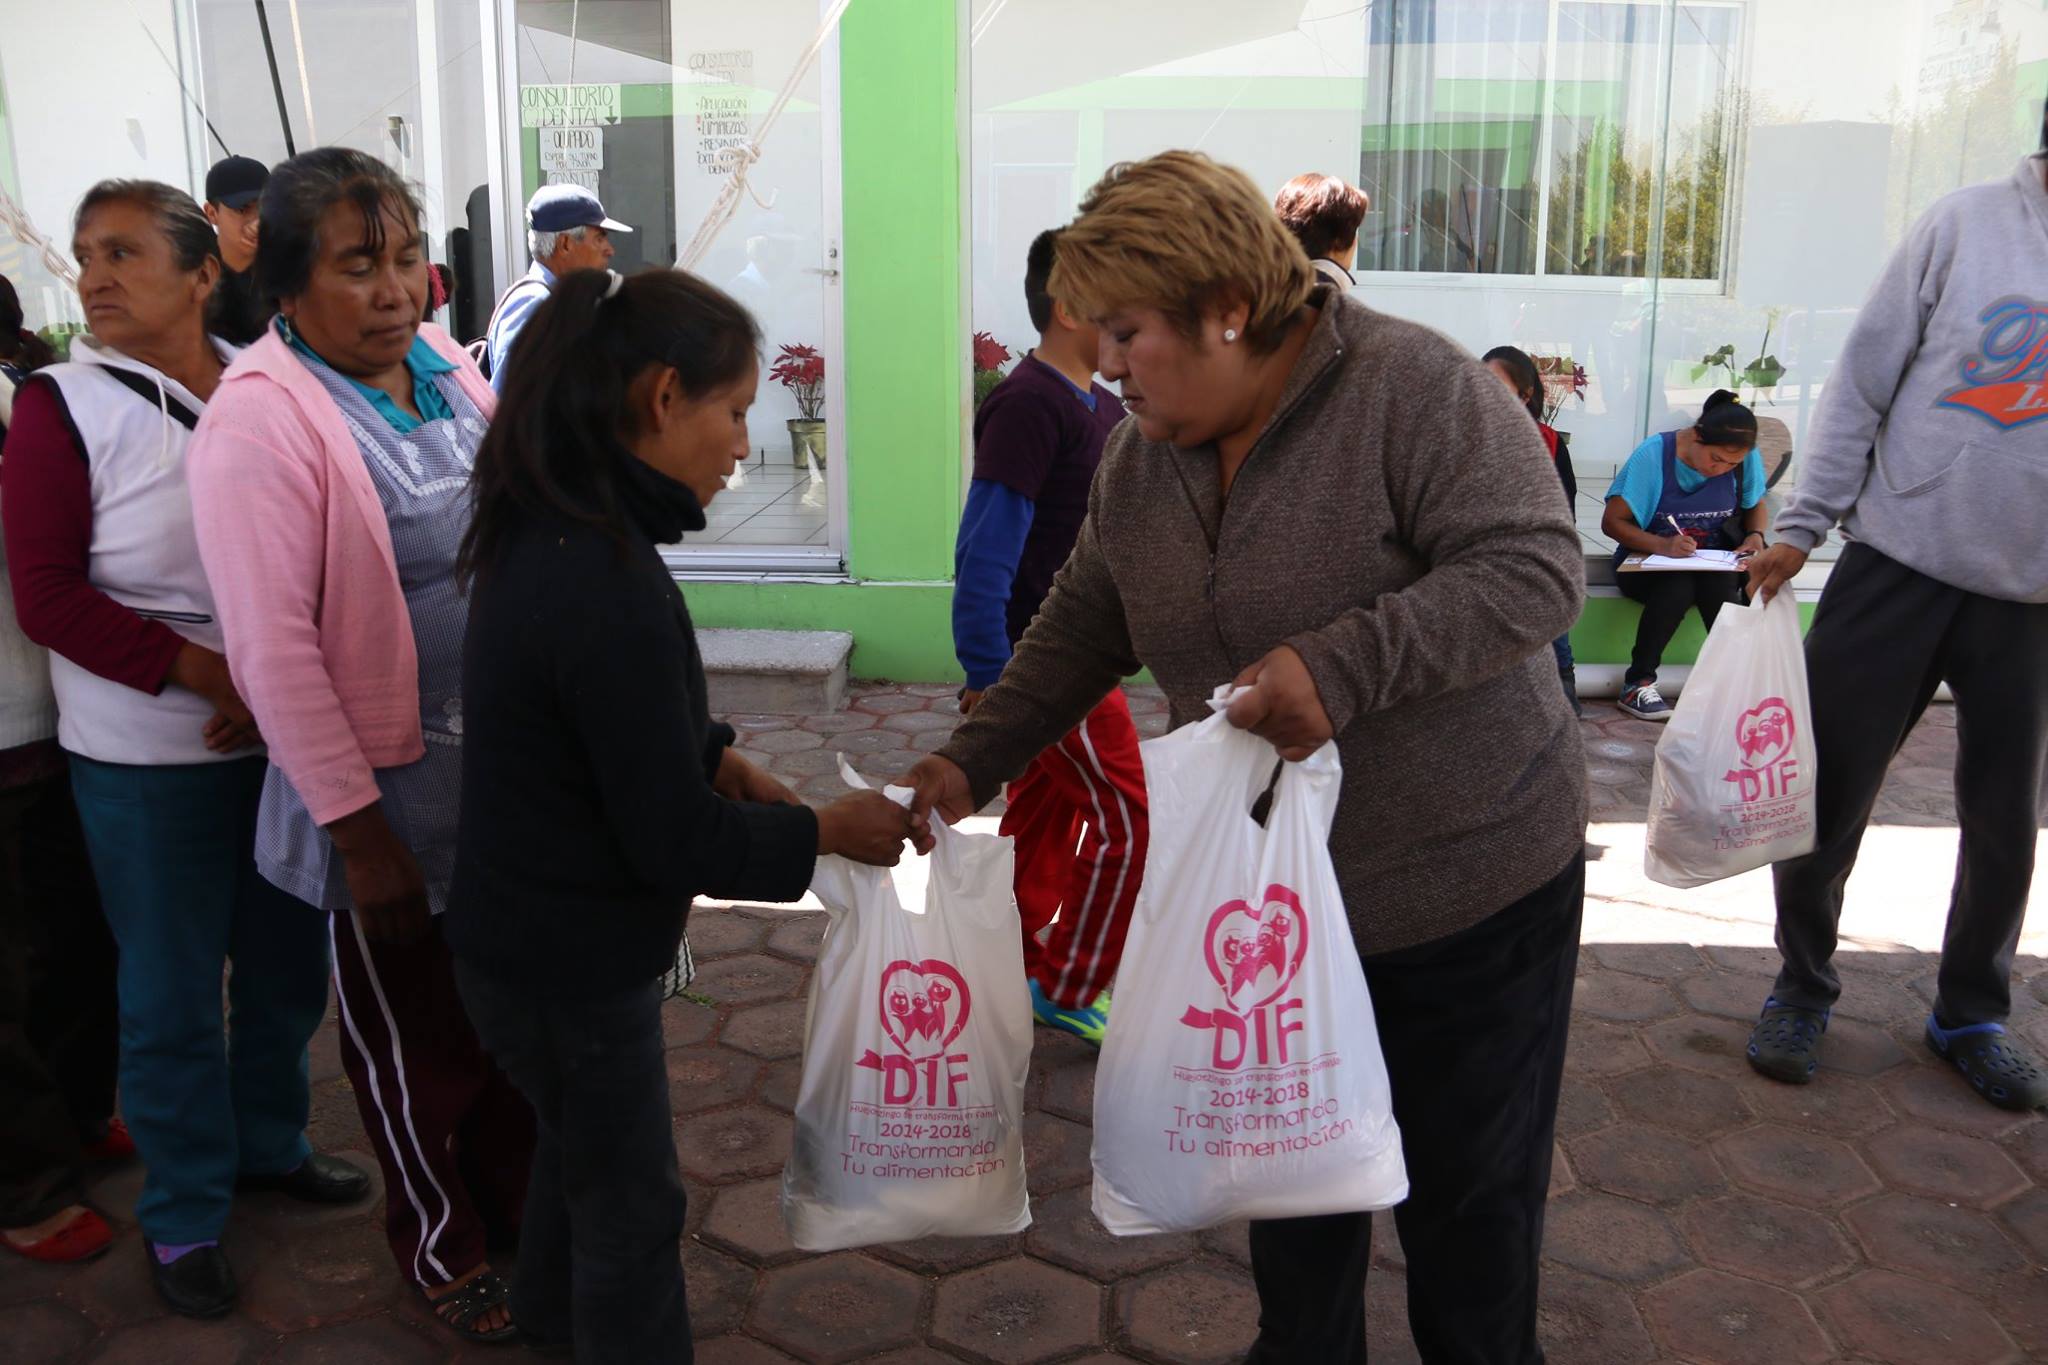 DIF Municipal entrega despensas a grupos vulnerables de Huejotzingo